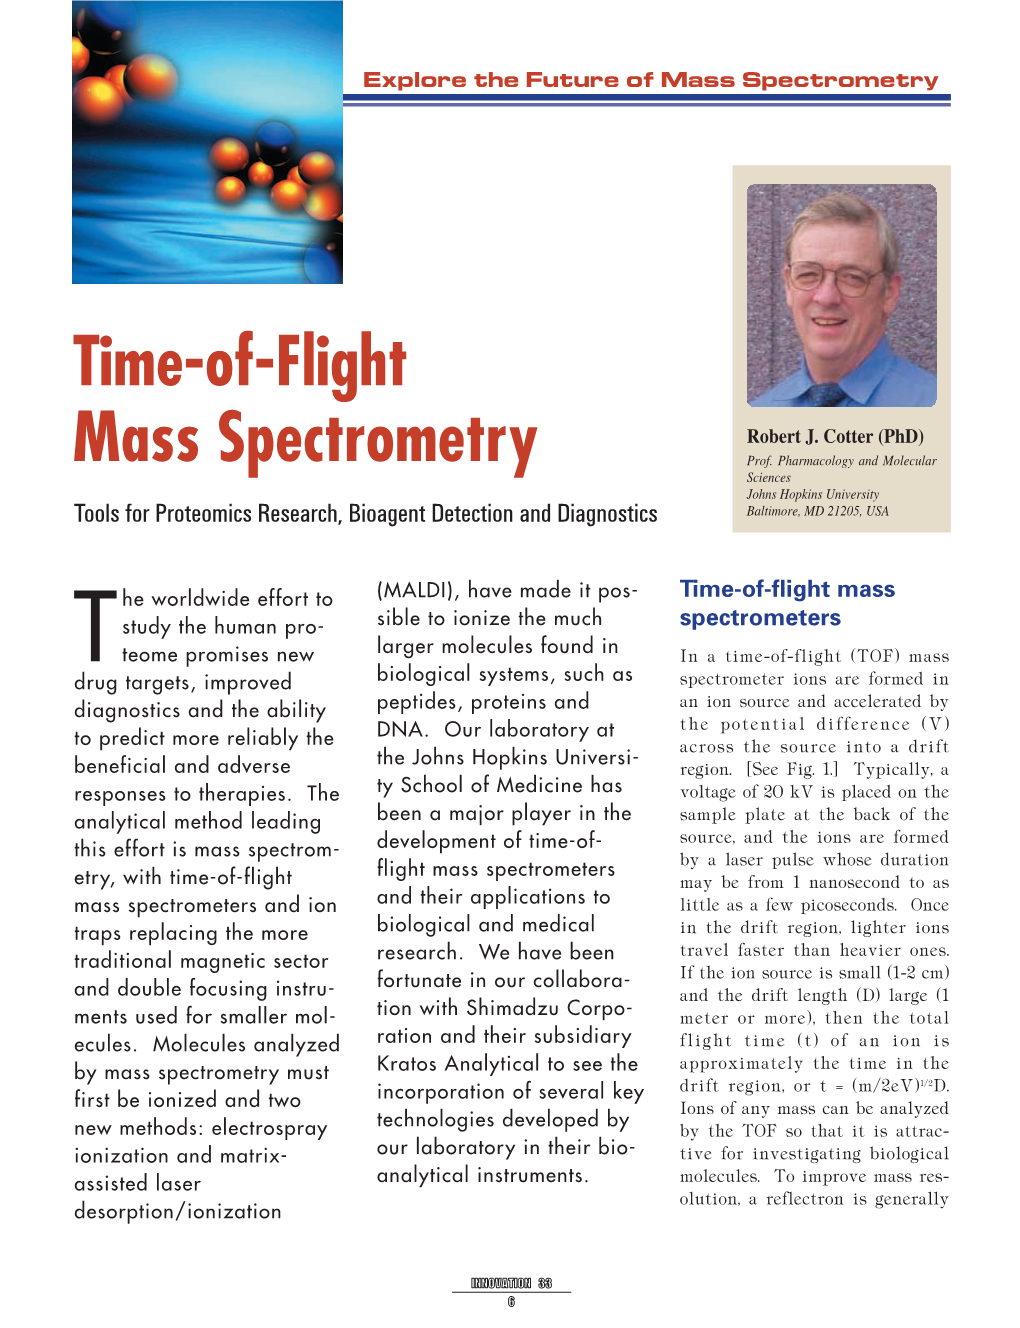 Time-Of-Flight Mass Spectrometry